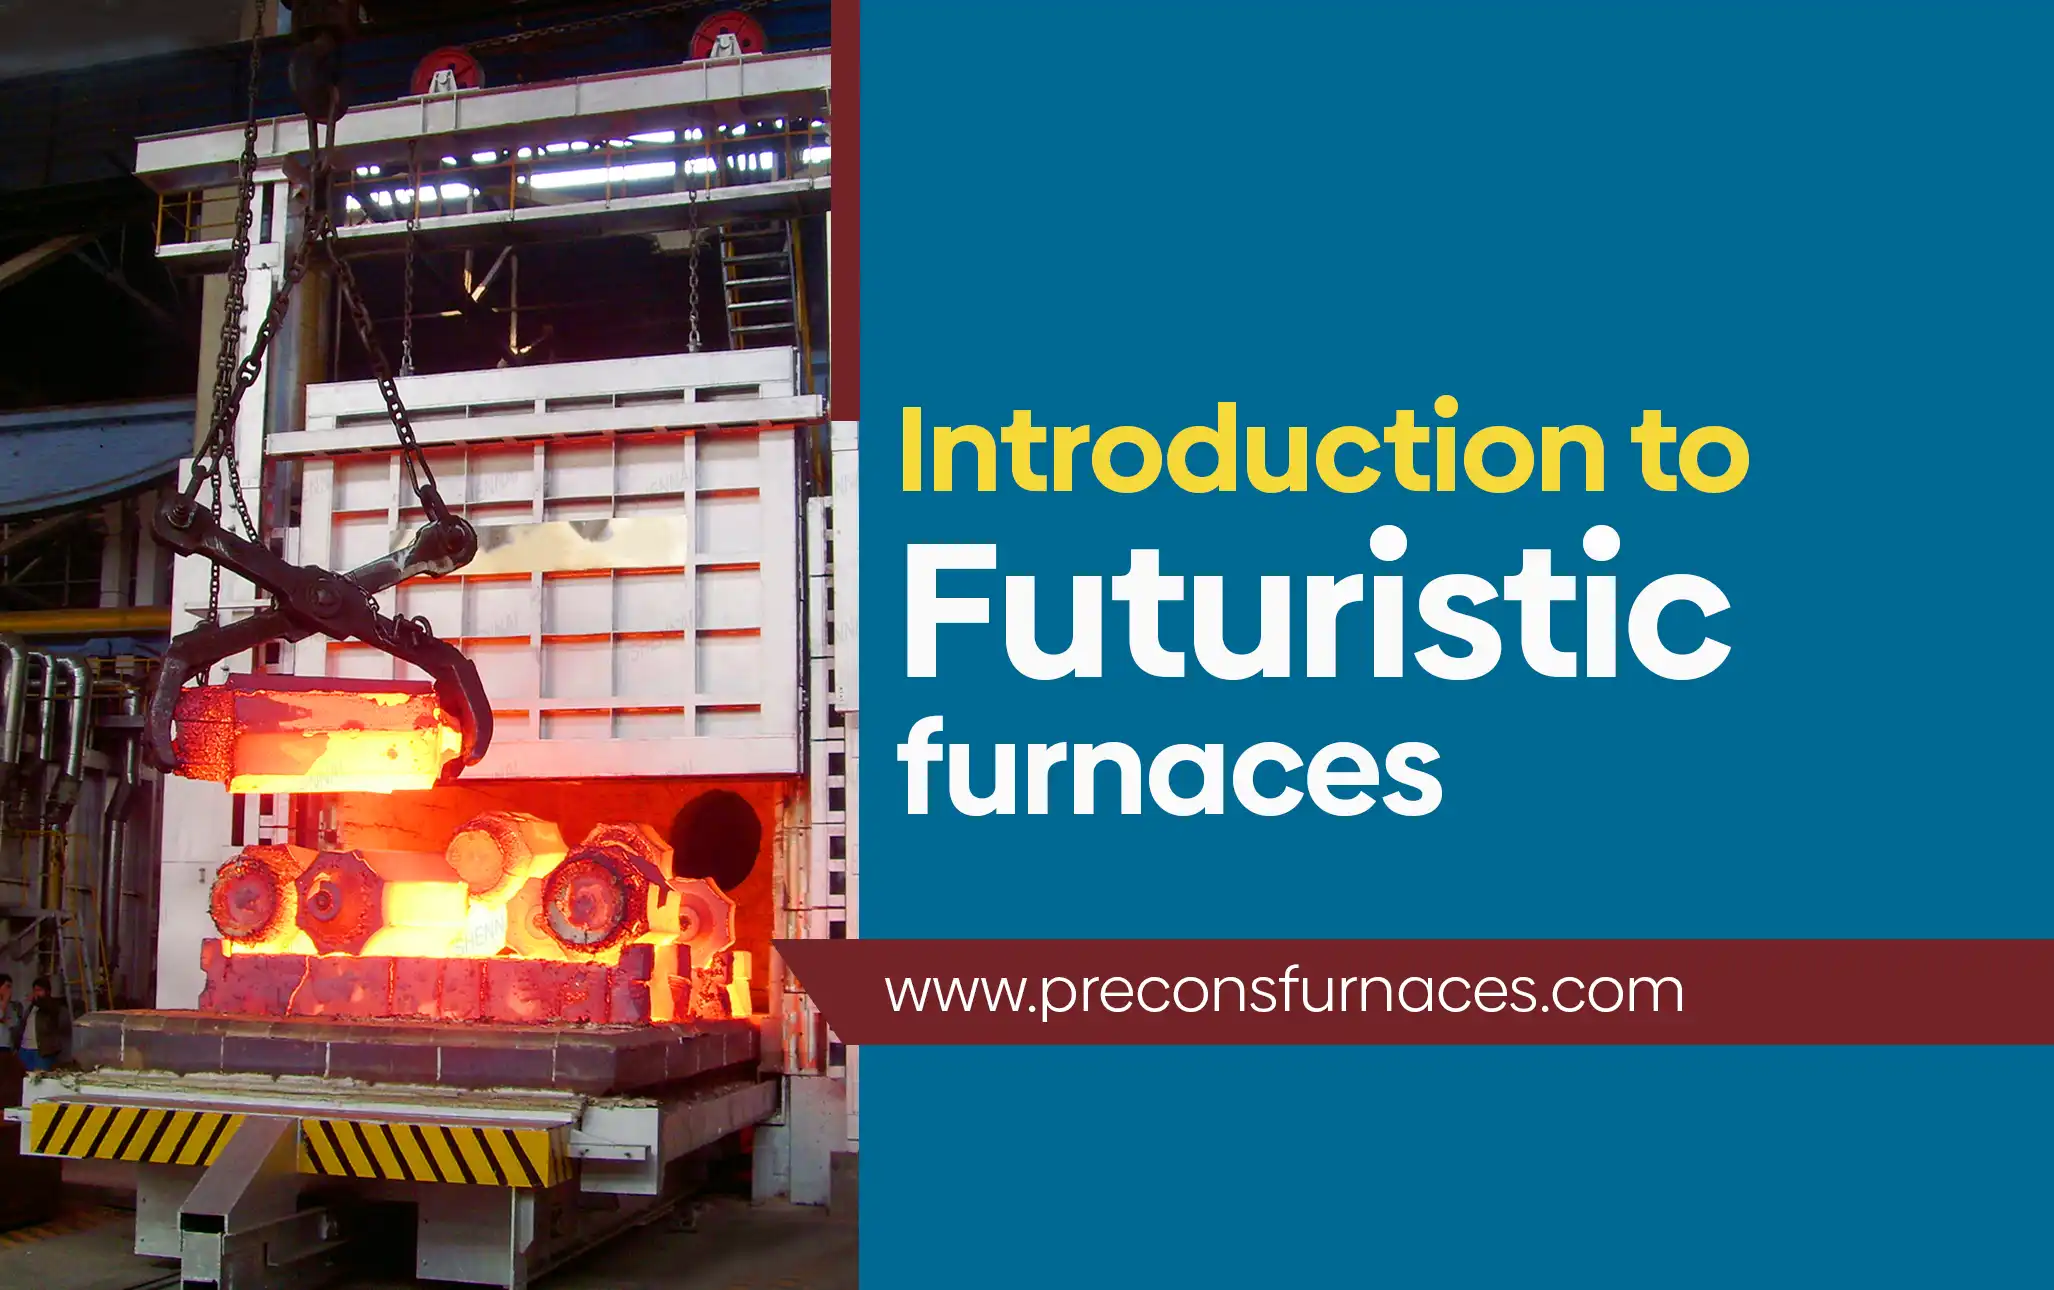 Futuristic furnaces